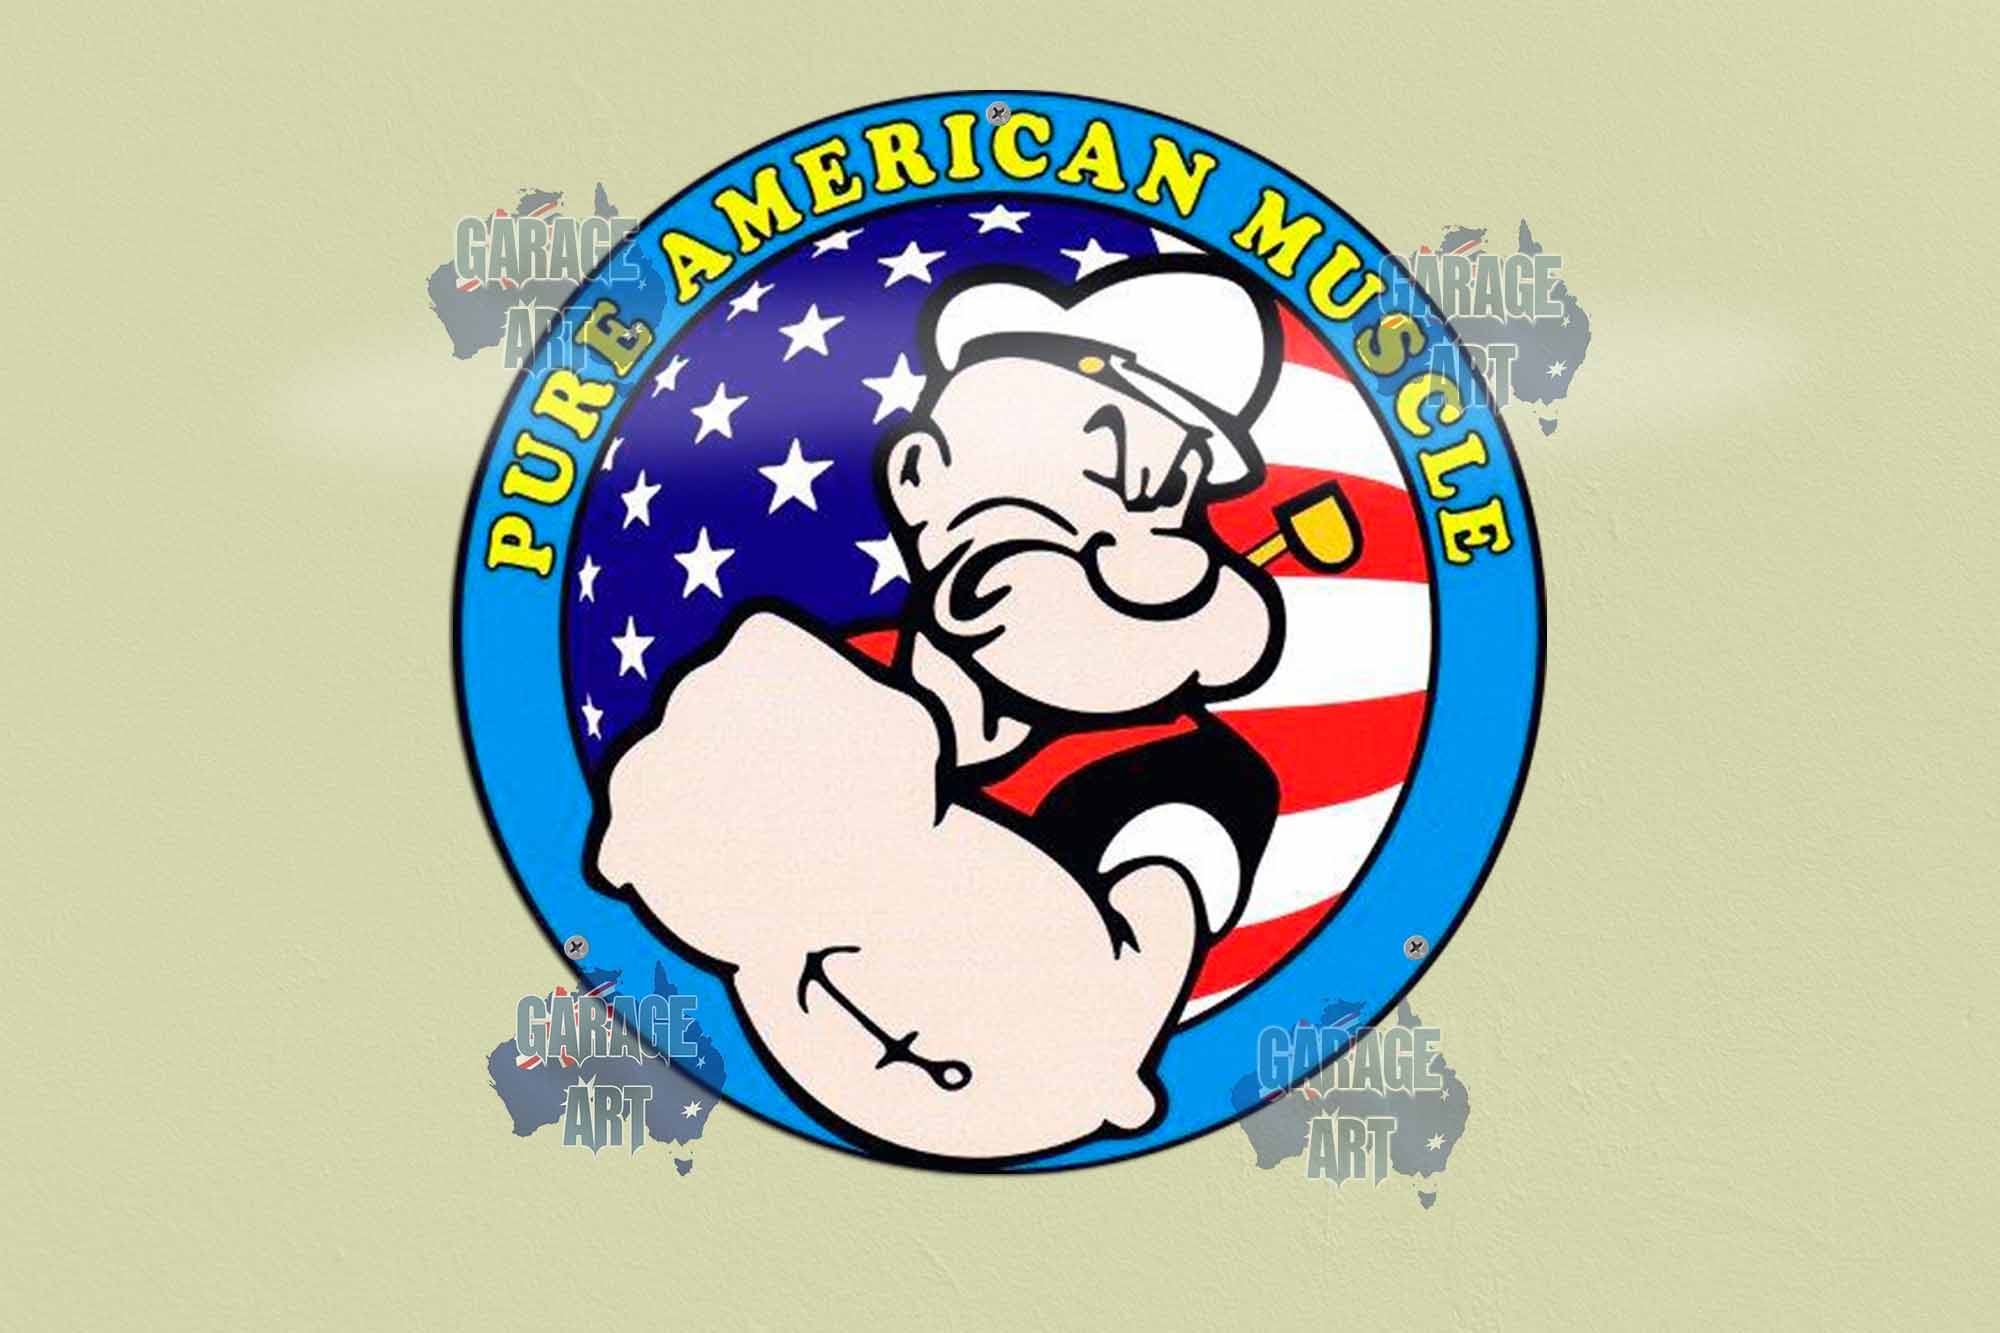 Pure American Muscle Popeye 355mmDia Tin Sign freeshipping - garageartaustralia